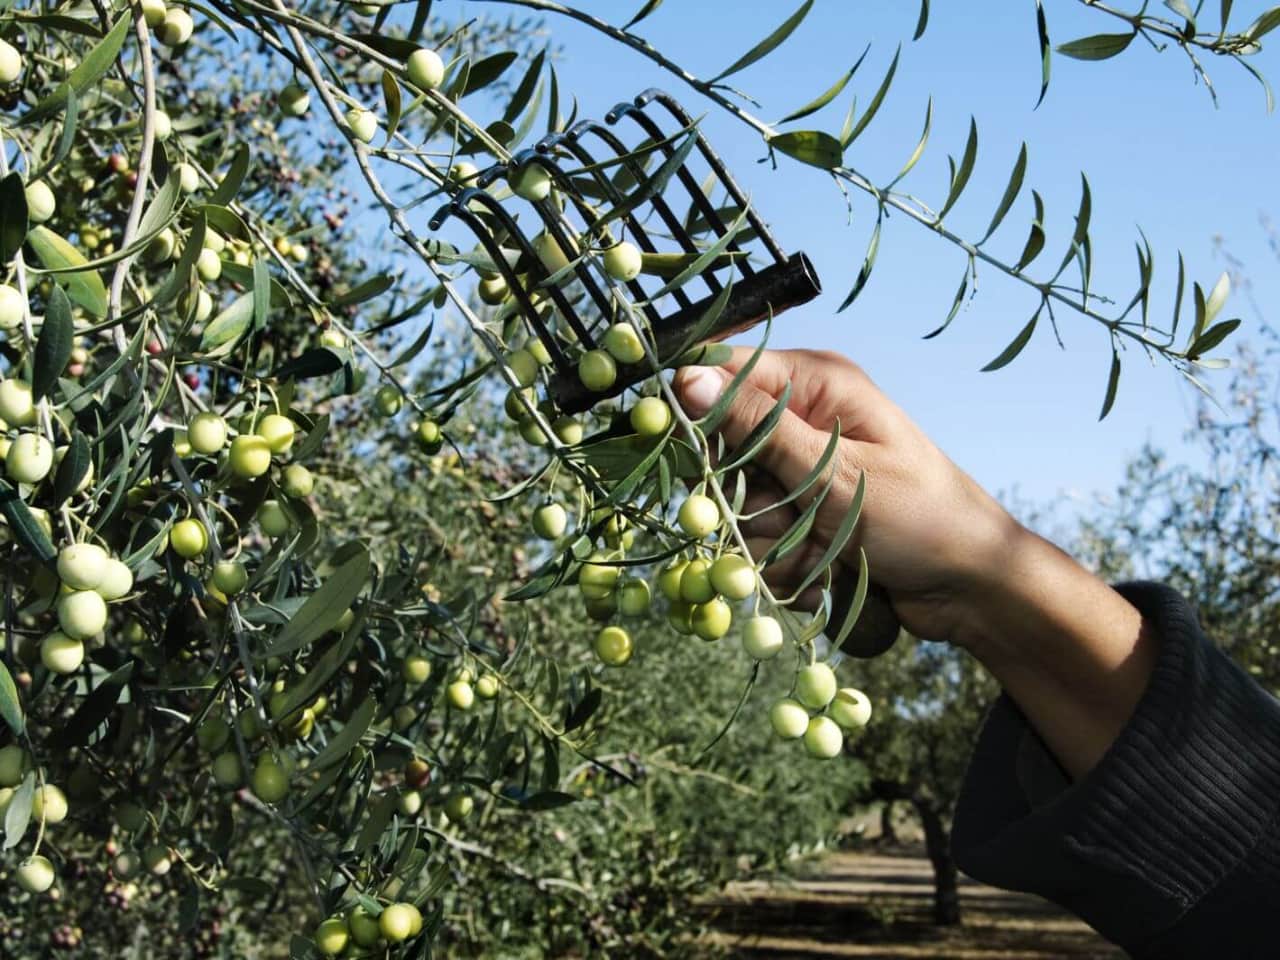 The olive harvesting season has begun for all Cretan producers